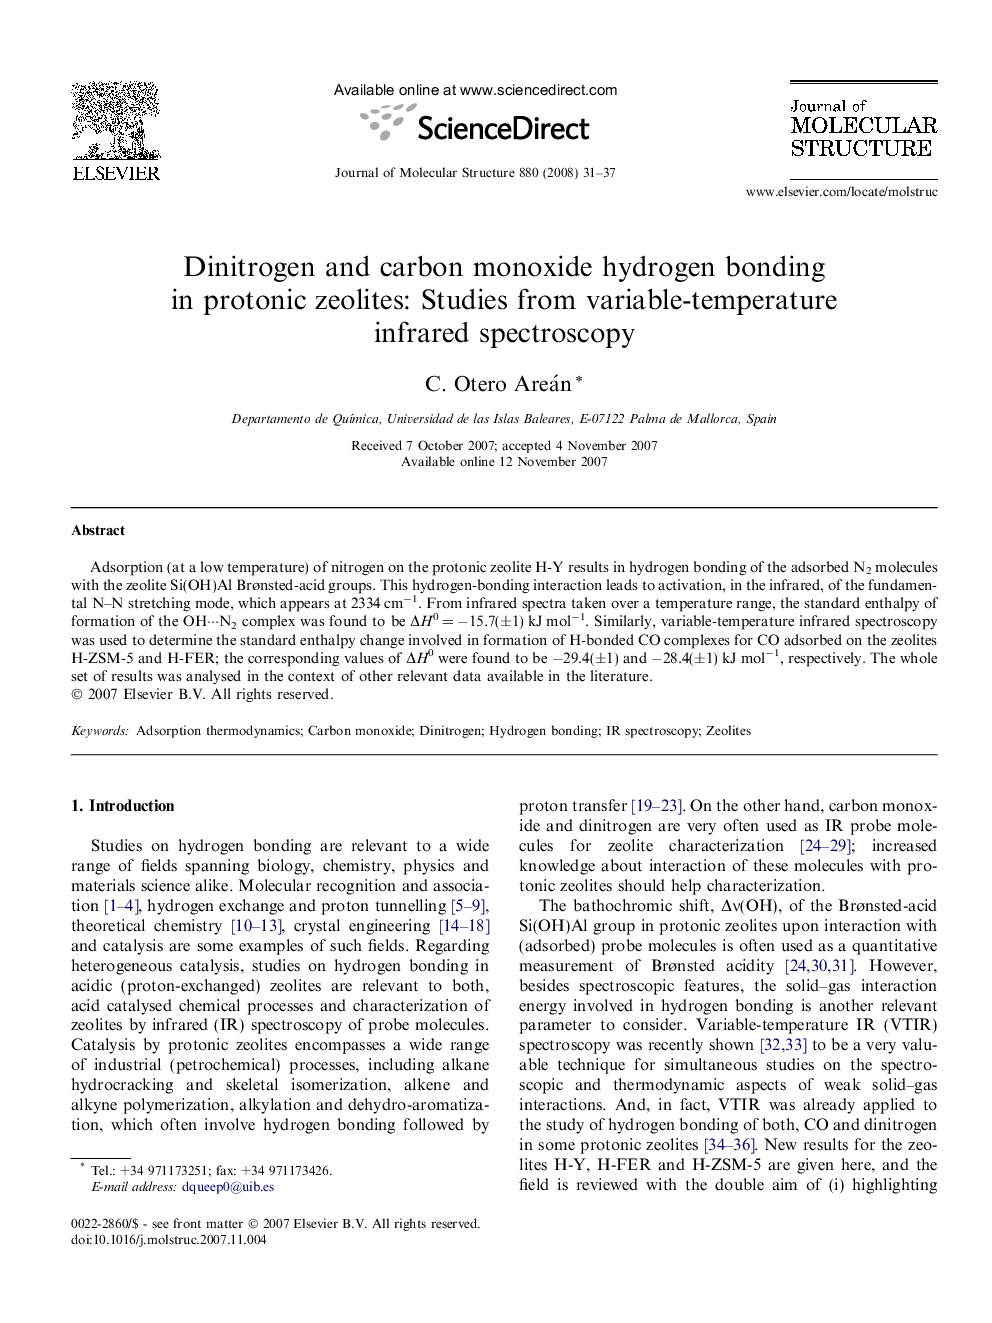 Dinitrogen and carbon monoxide hydrogen bonding in protonic zeolites: Studies from variable-temperature infrared spectroscopy